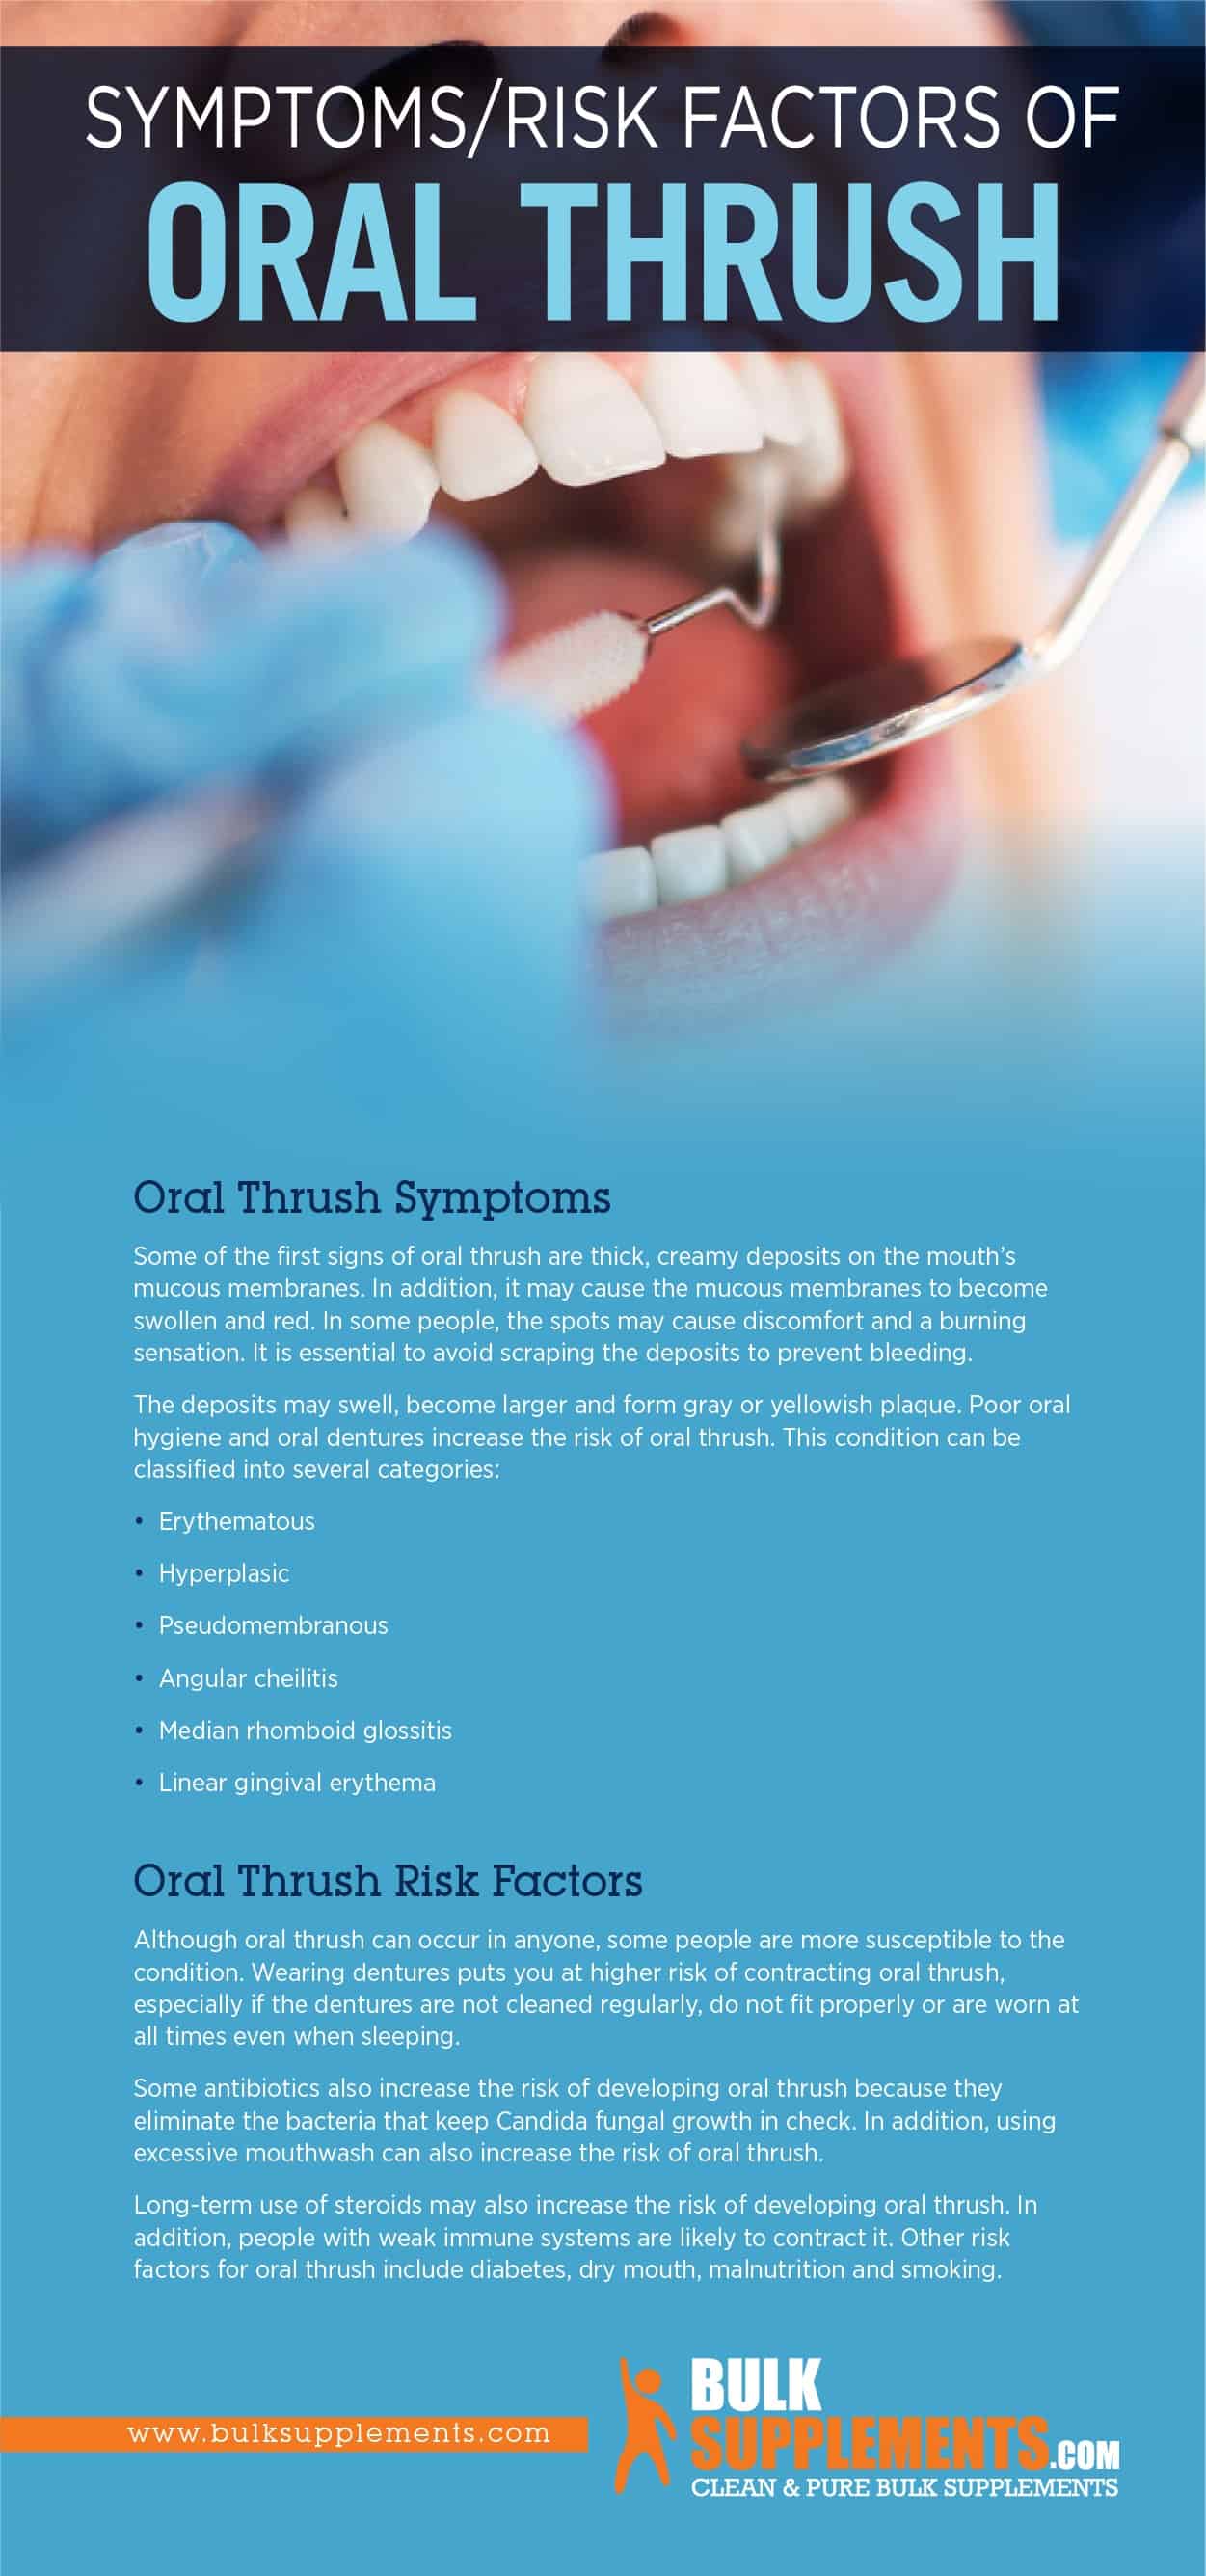 Symptoms/Risk Factors of Oral Thrush